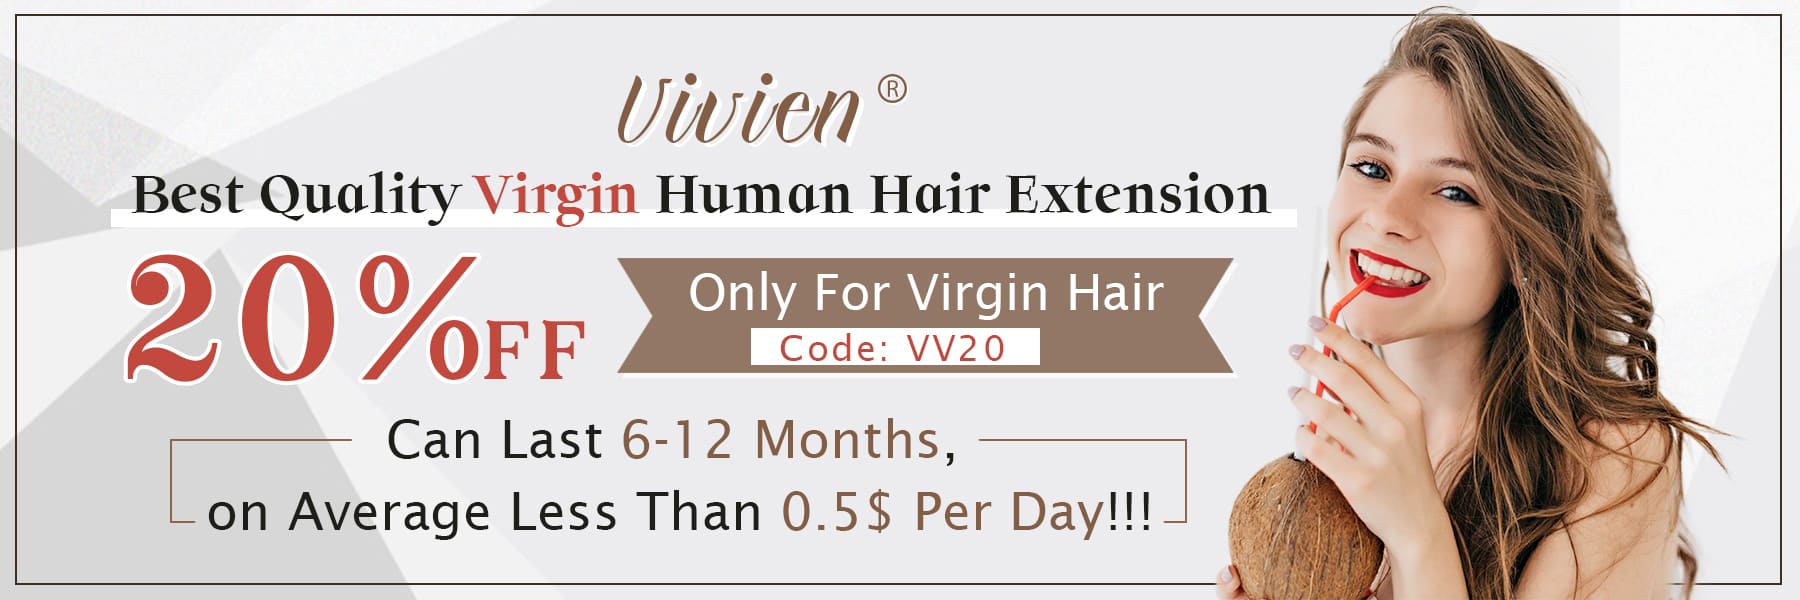 vivien virgin human hair extensions